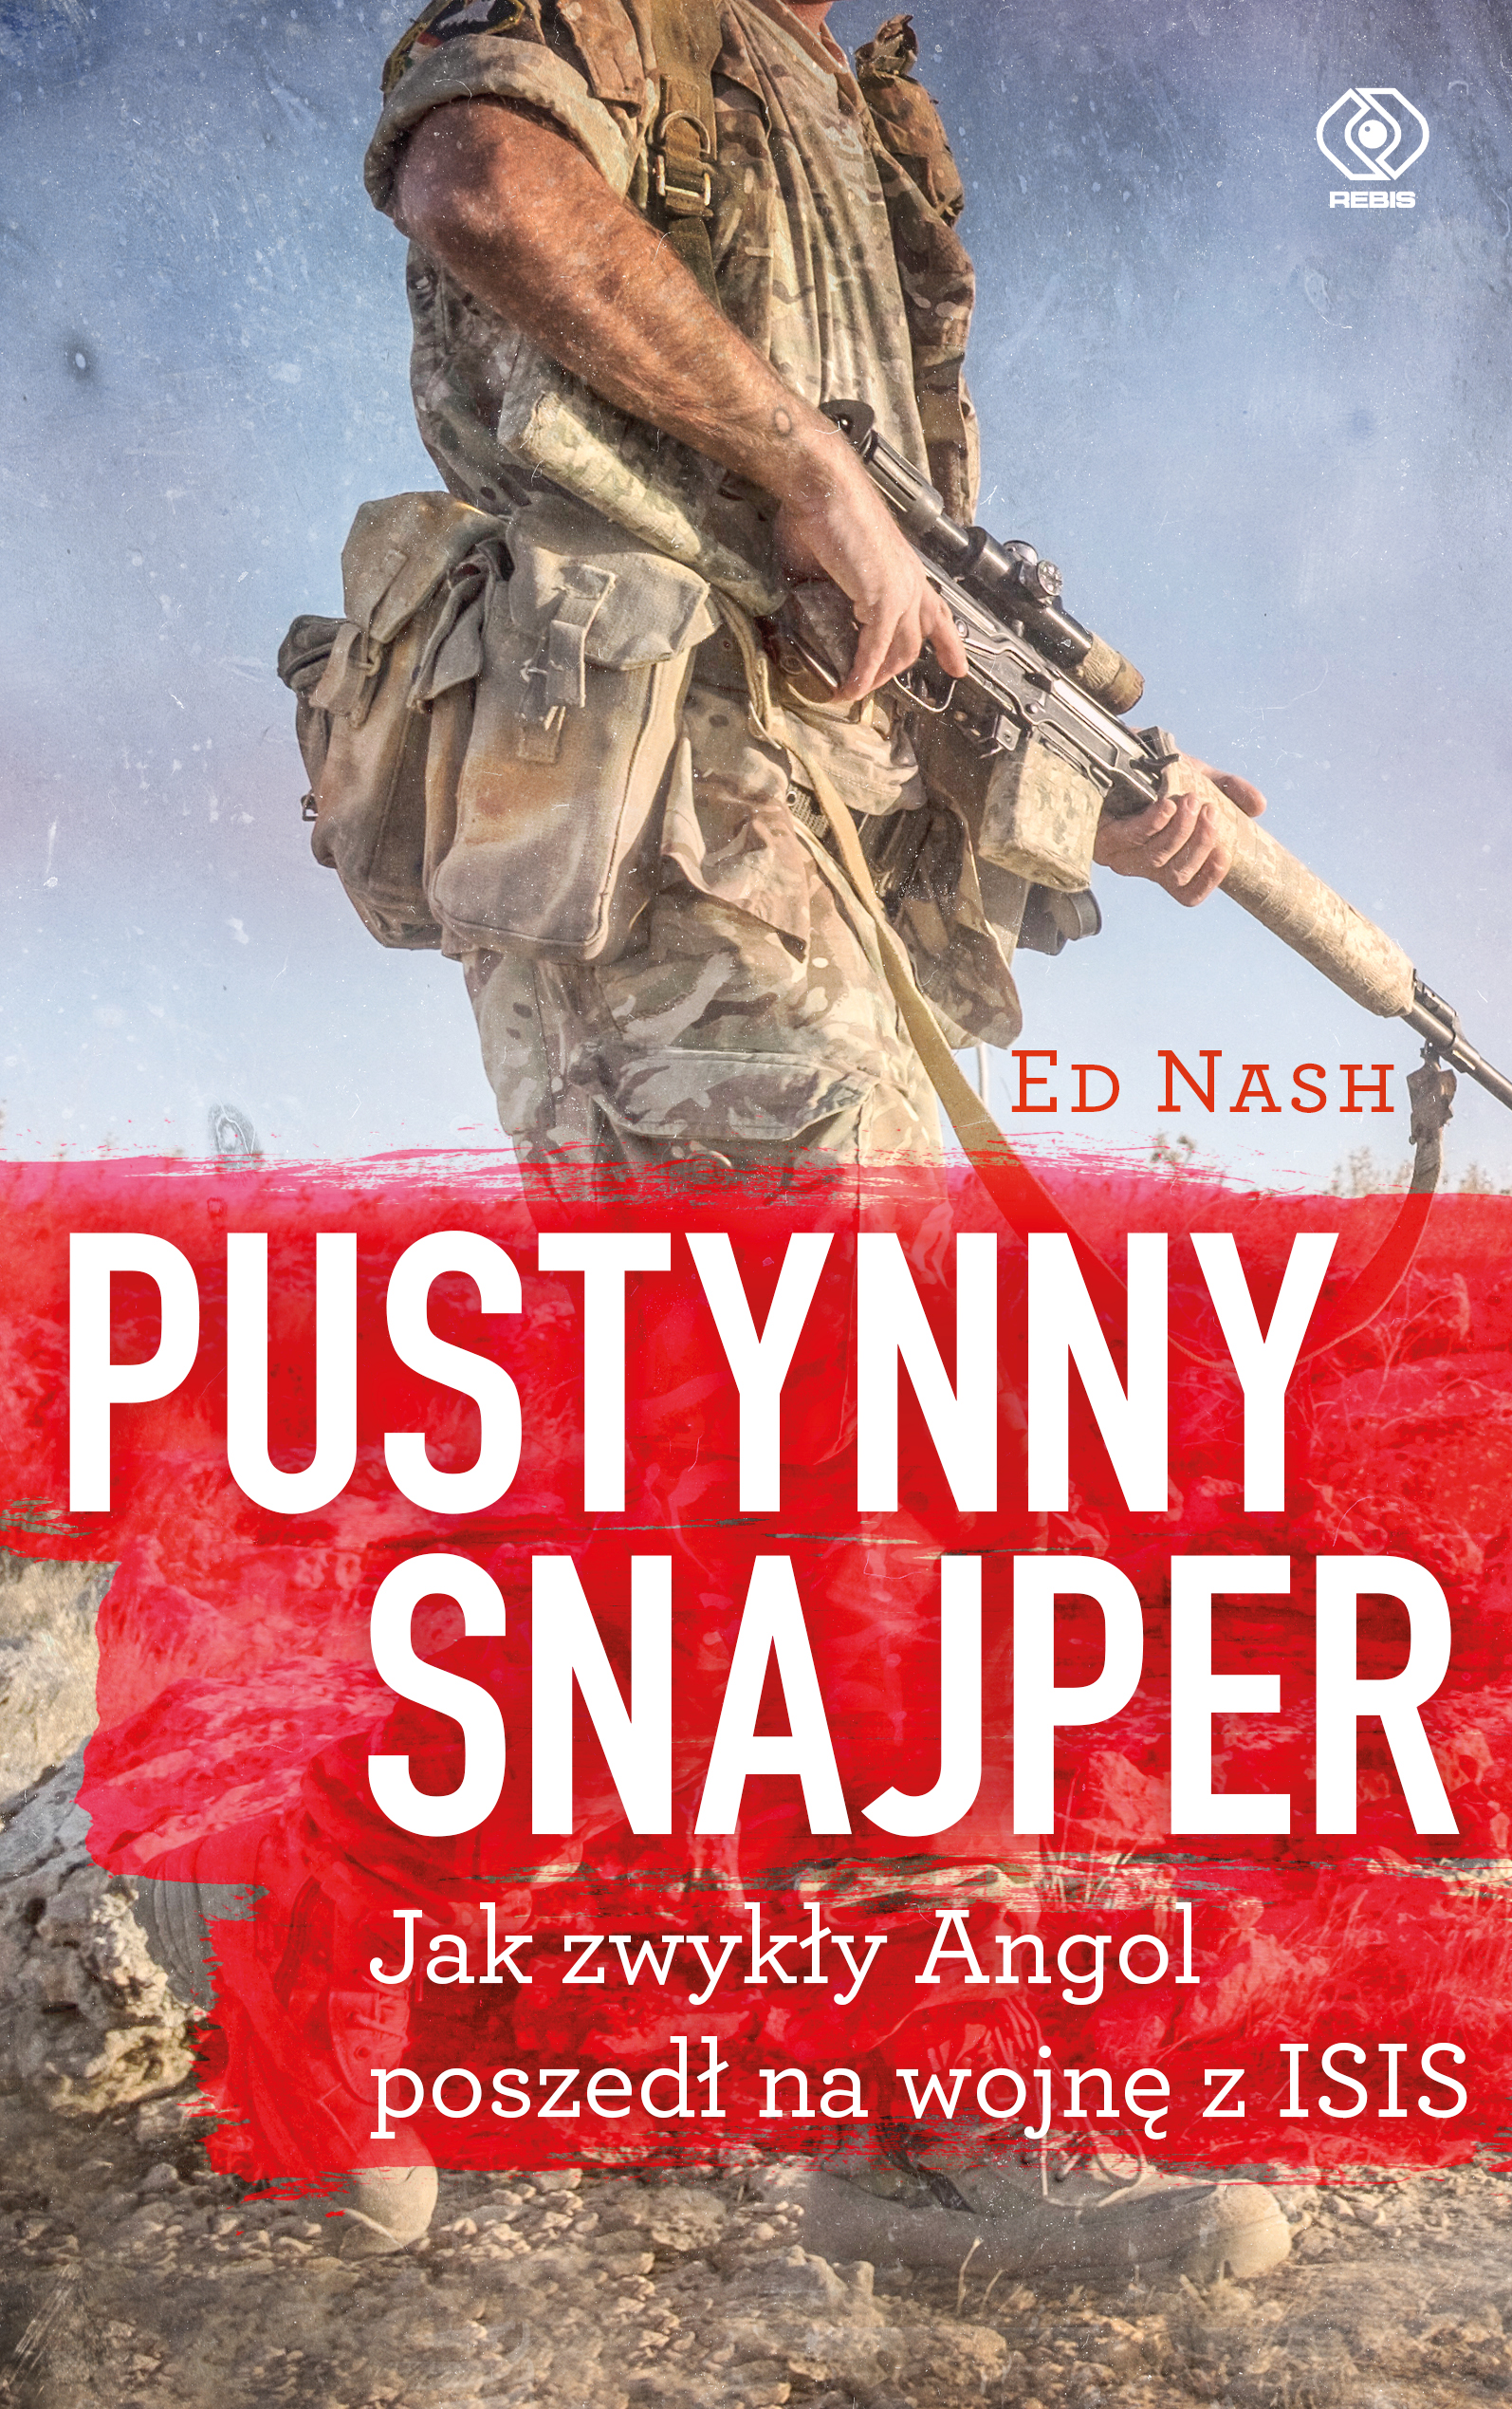  "Pustynny snajper", Ed Nash